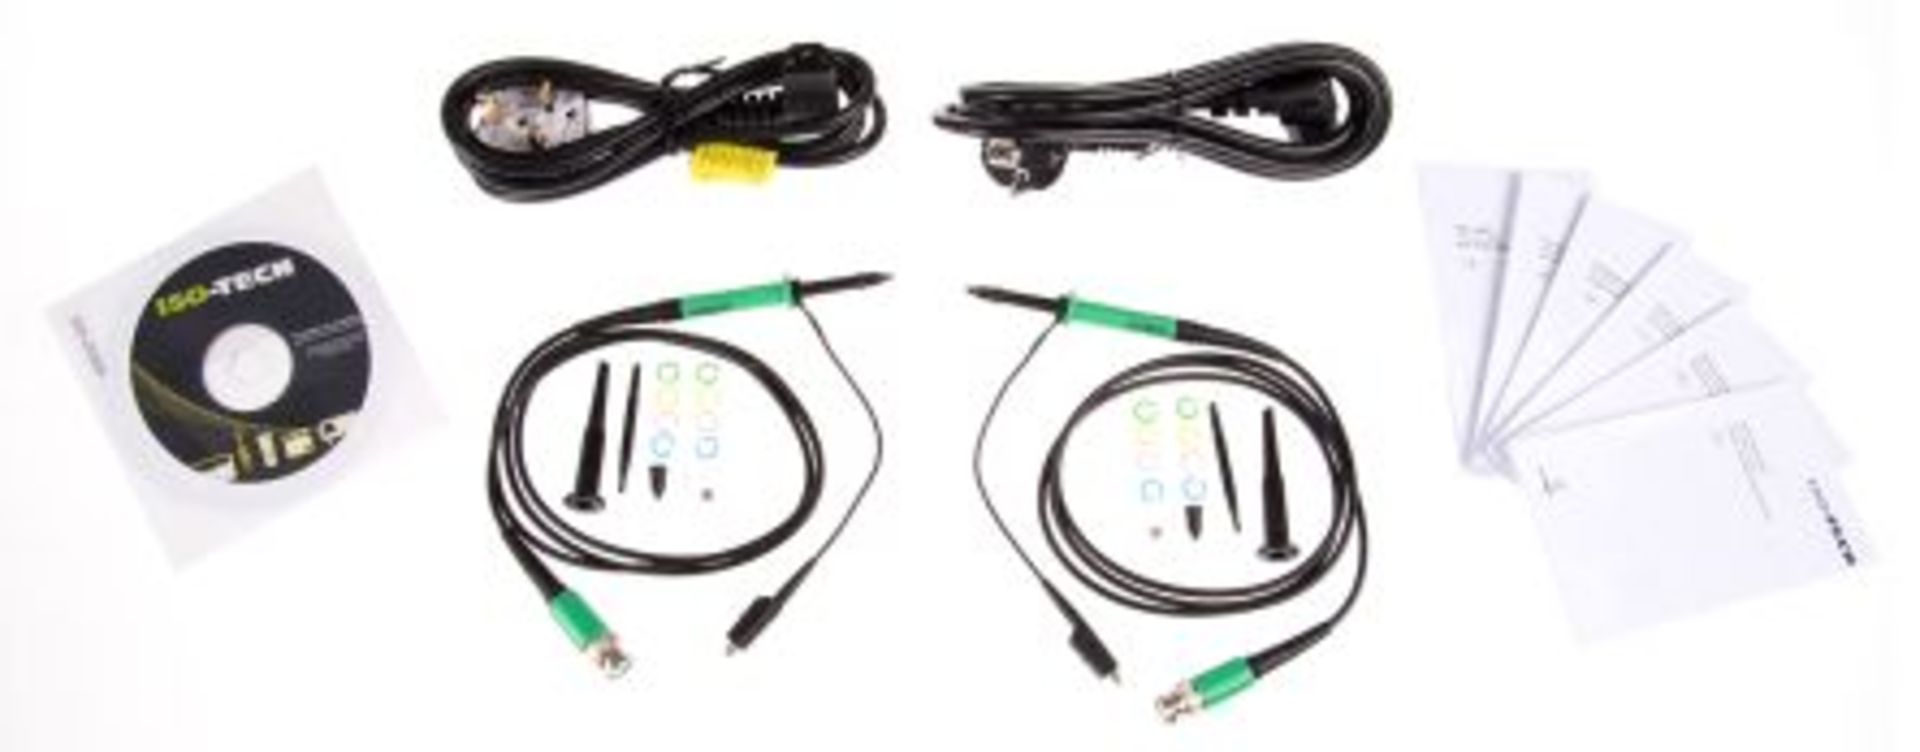 IDS-2202A Digital Oscilloscope, Digital Storage, 2 Channels, 200MHz - Image 3 of 3